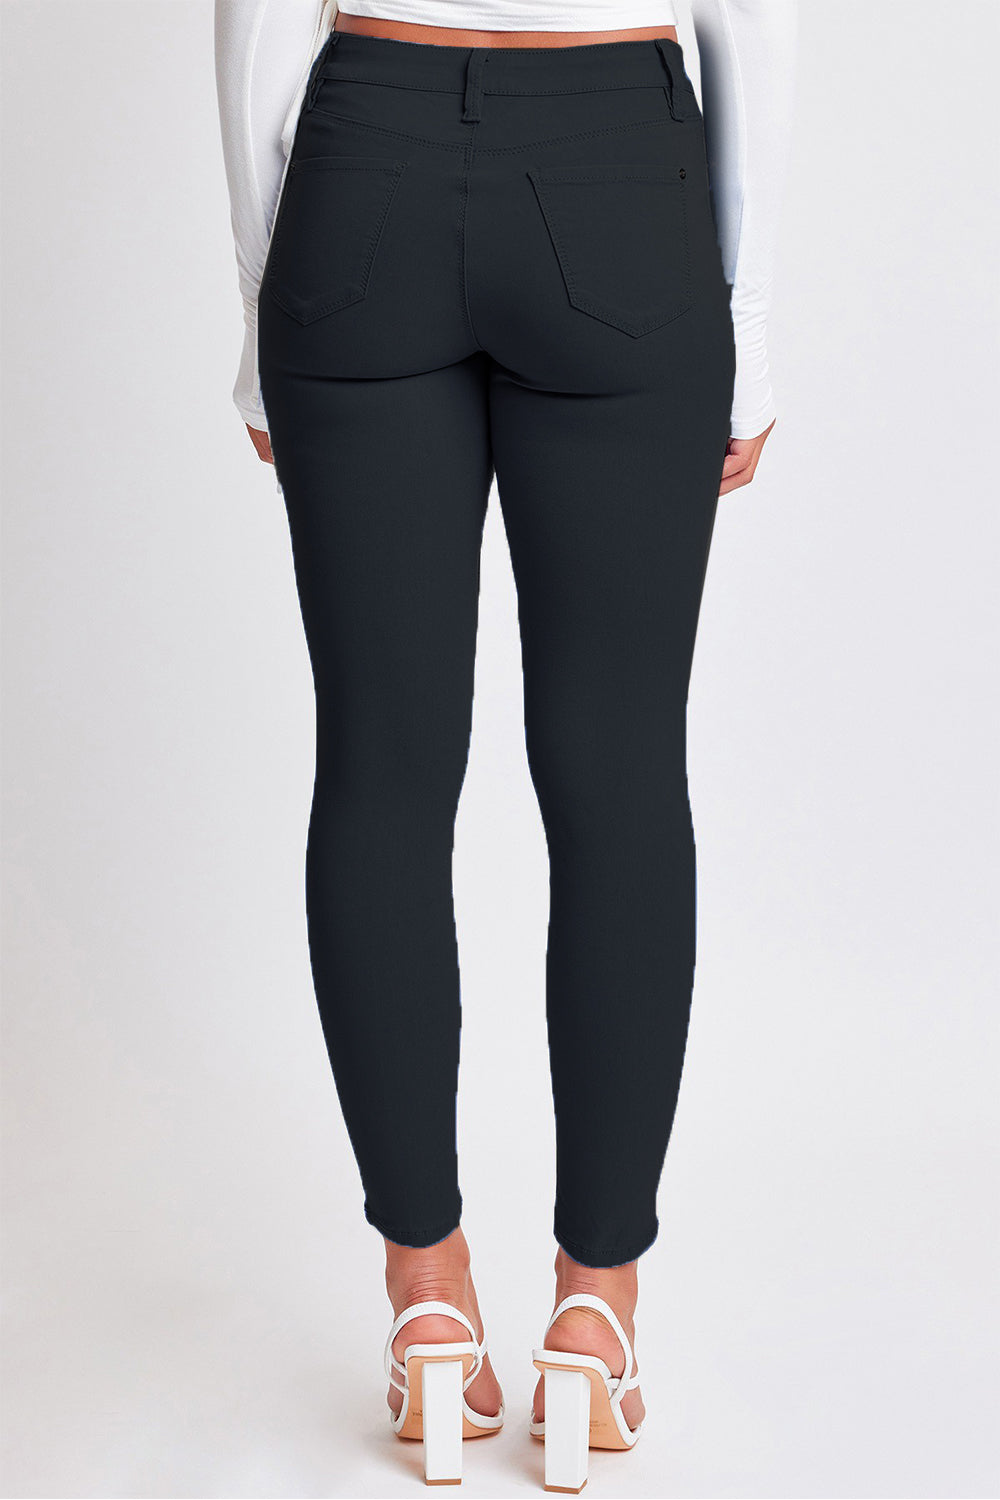 Morgan Hyperstretch Mid-Rise Skinny Pants in Black